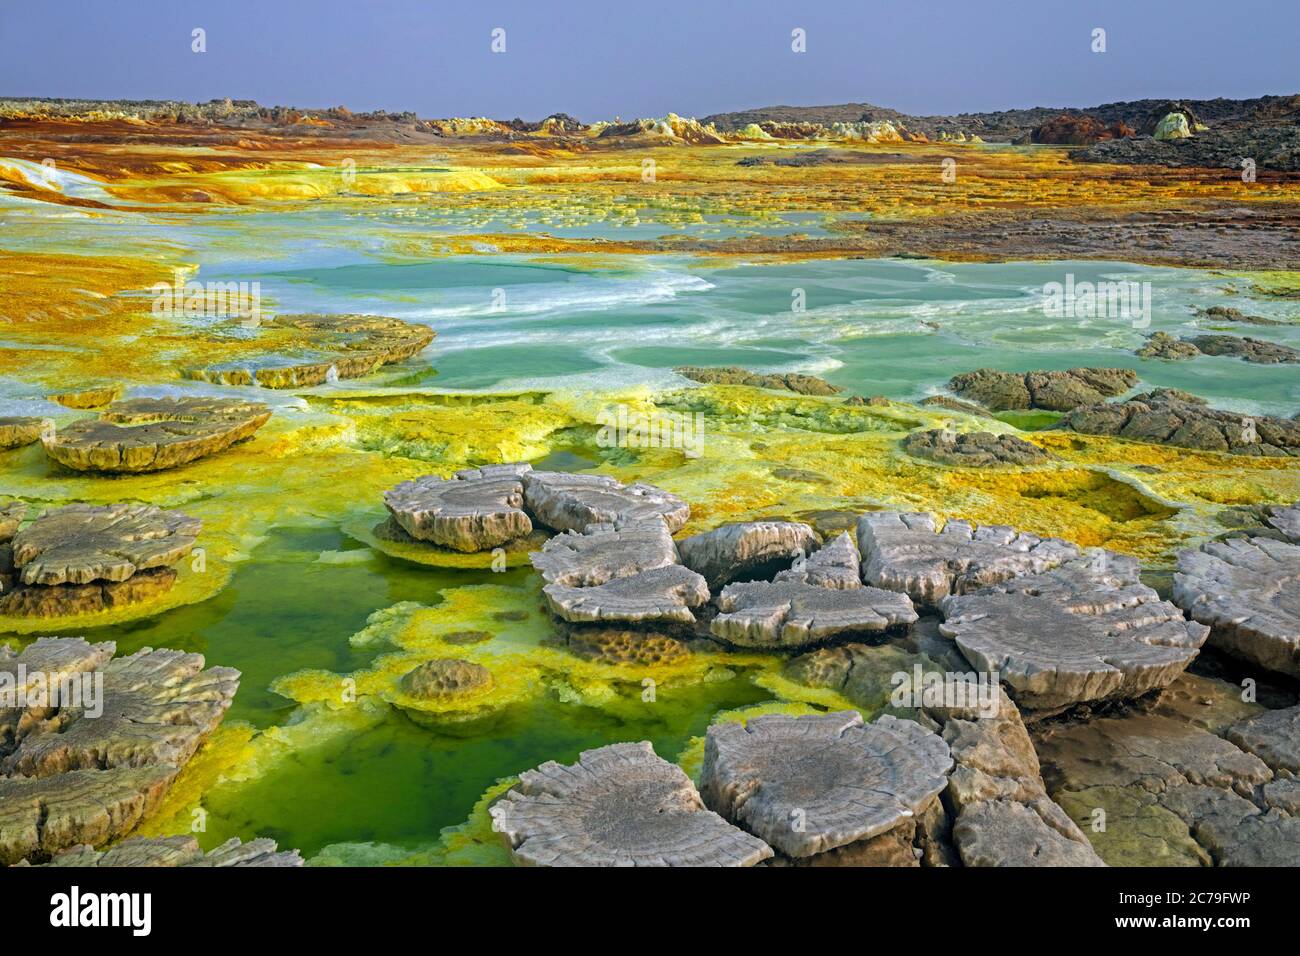 Dallol sulfur springs / hot springs in the Danakil Depression discharge brine and acidic liquid in green acid ponds, Afar Region, Ethiopia, Africa Stock Photo